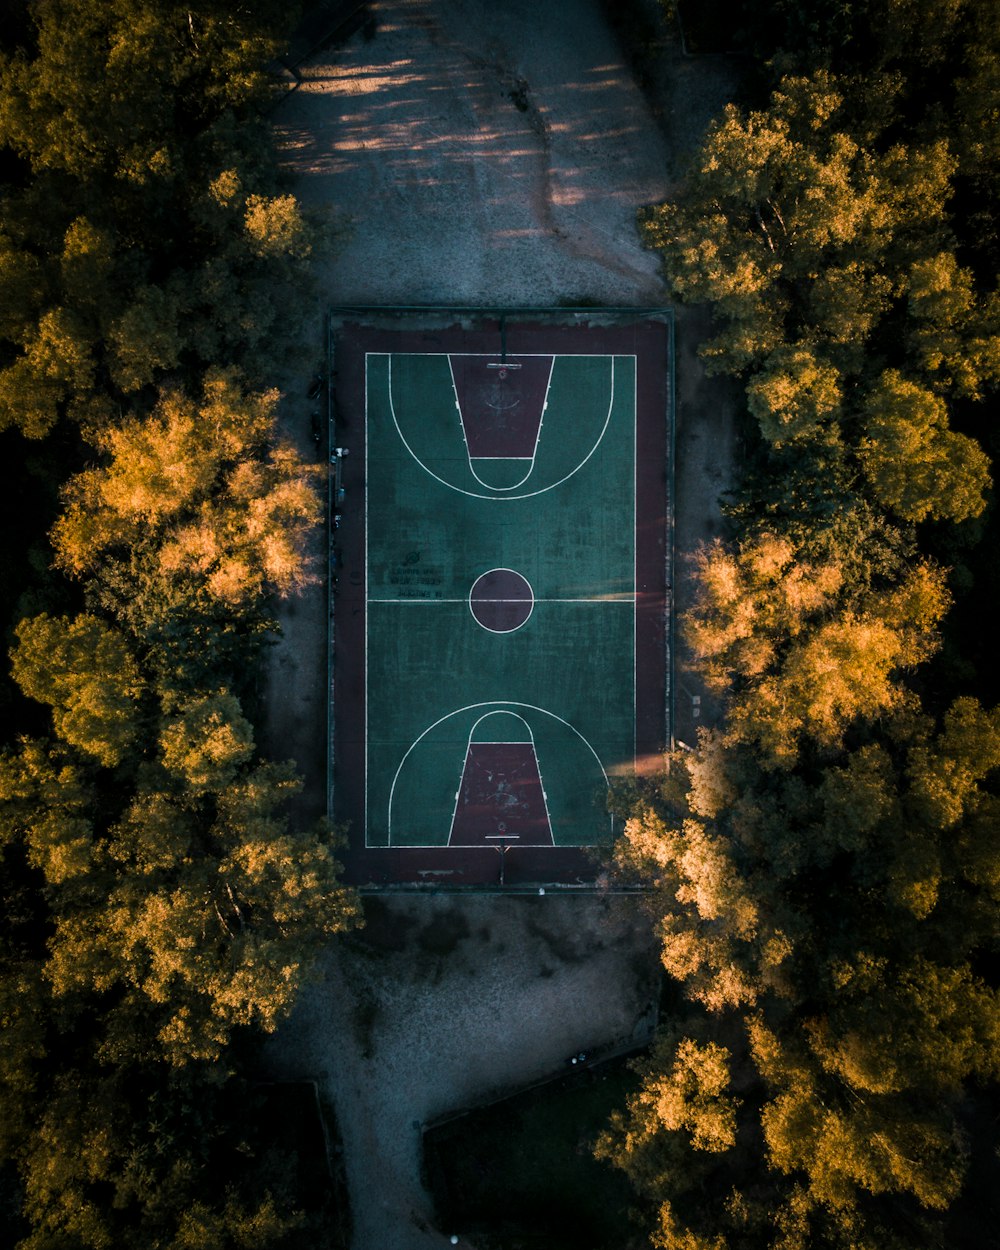 birds eye view of basketball court